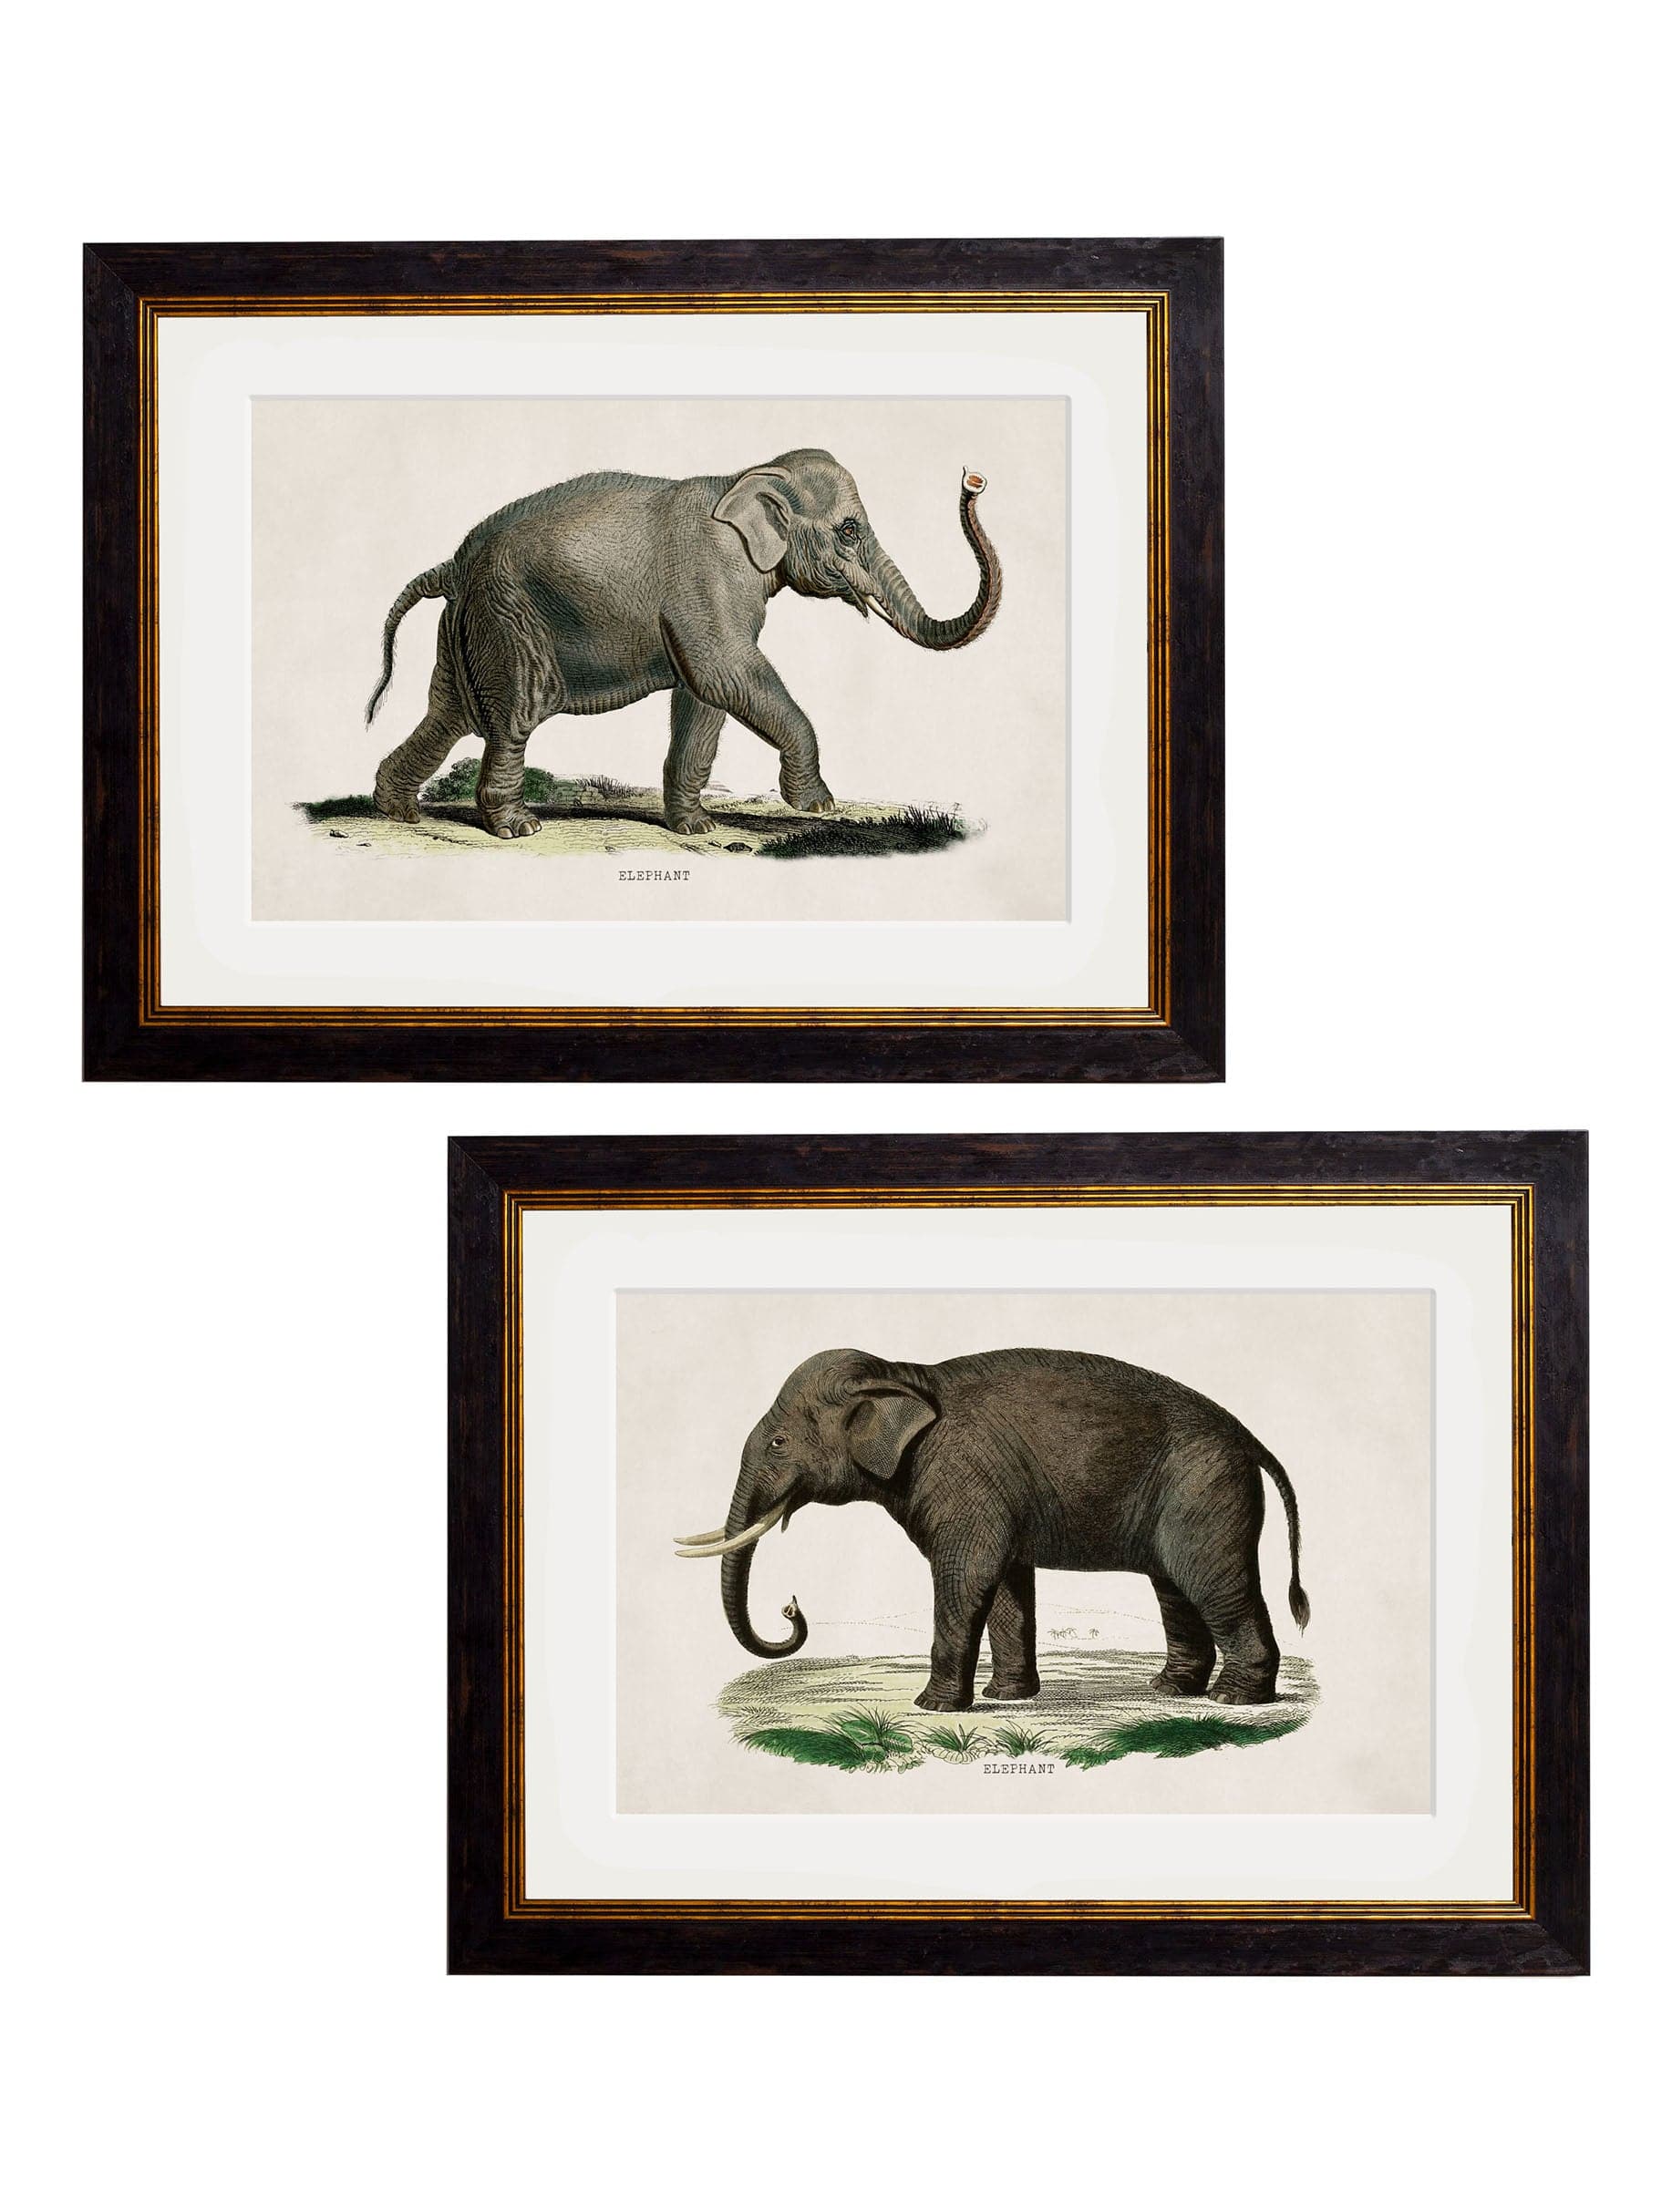 C.1846 Elephants for sale - Woodcock and Cavendish